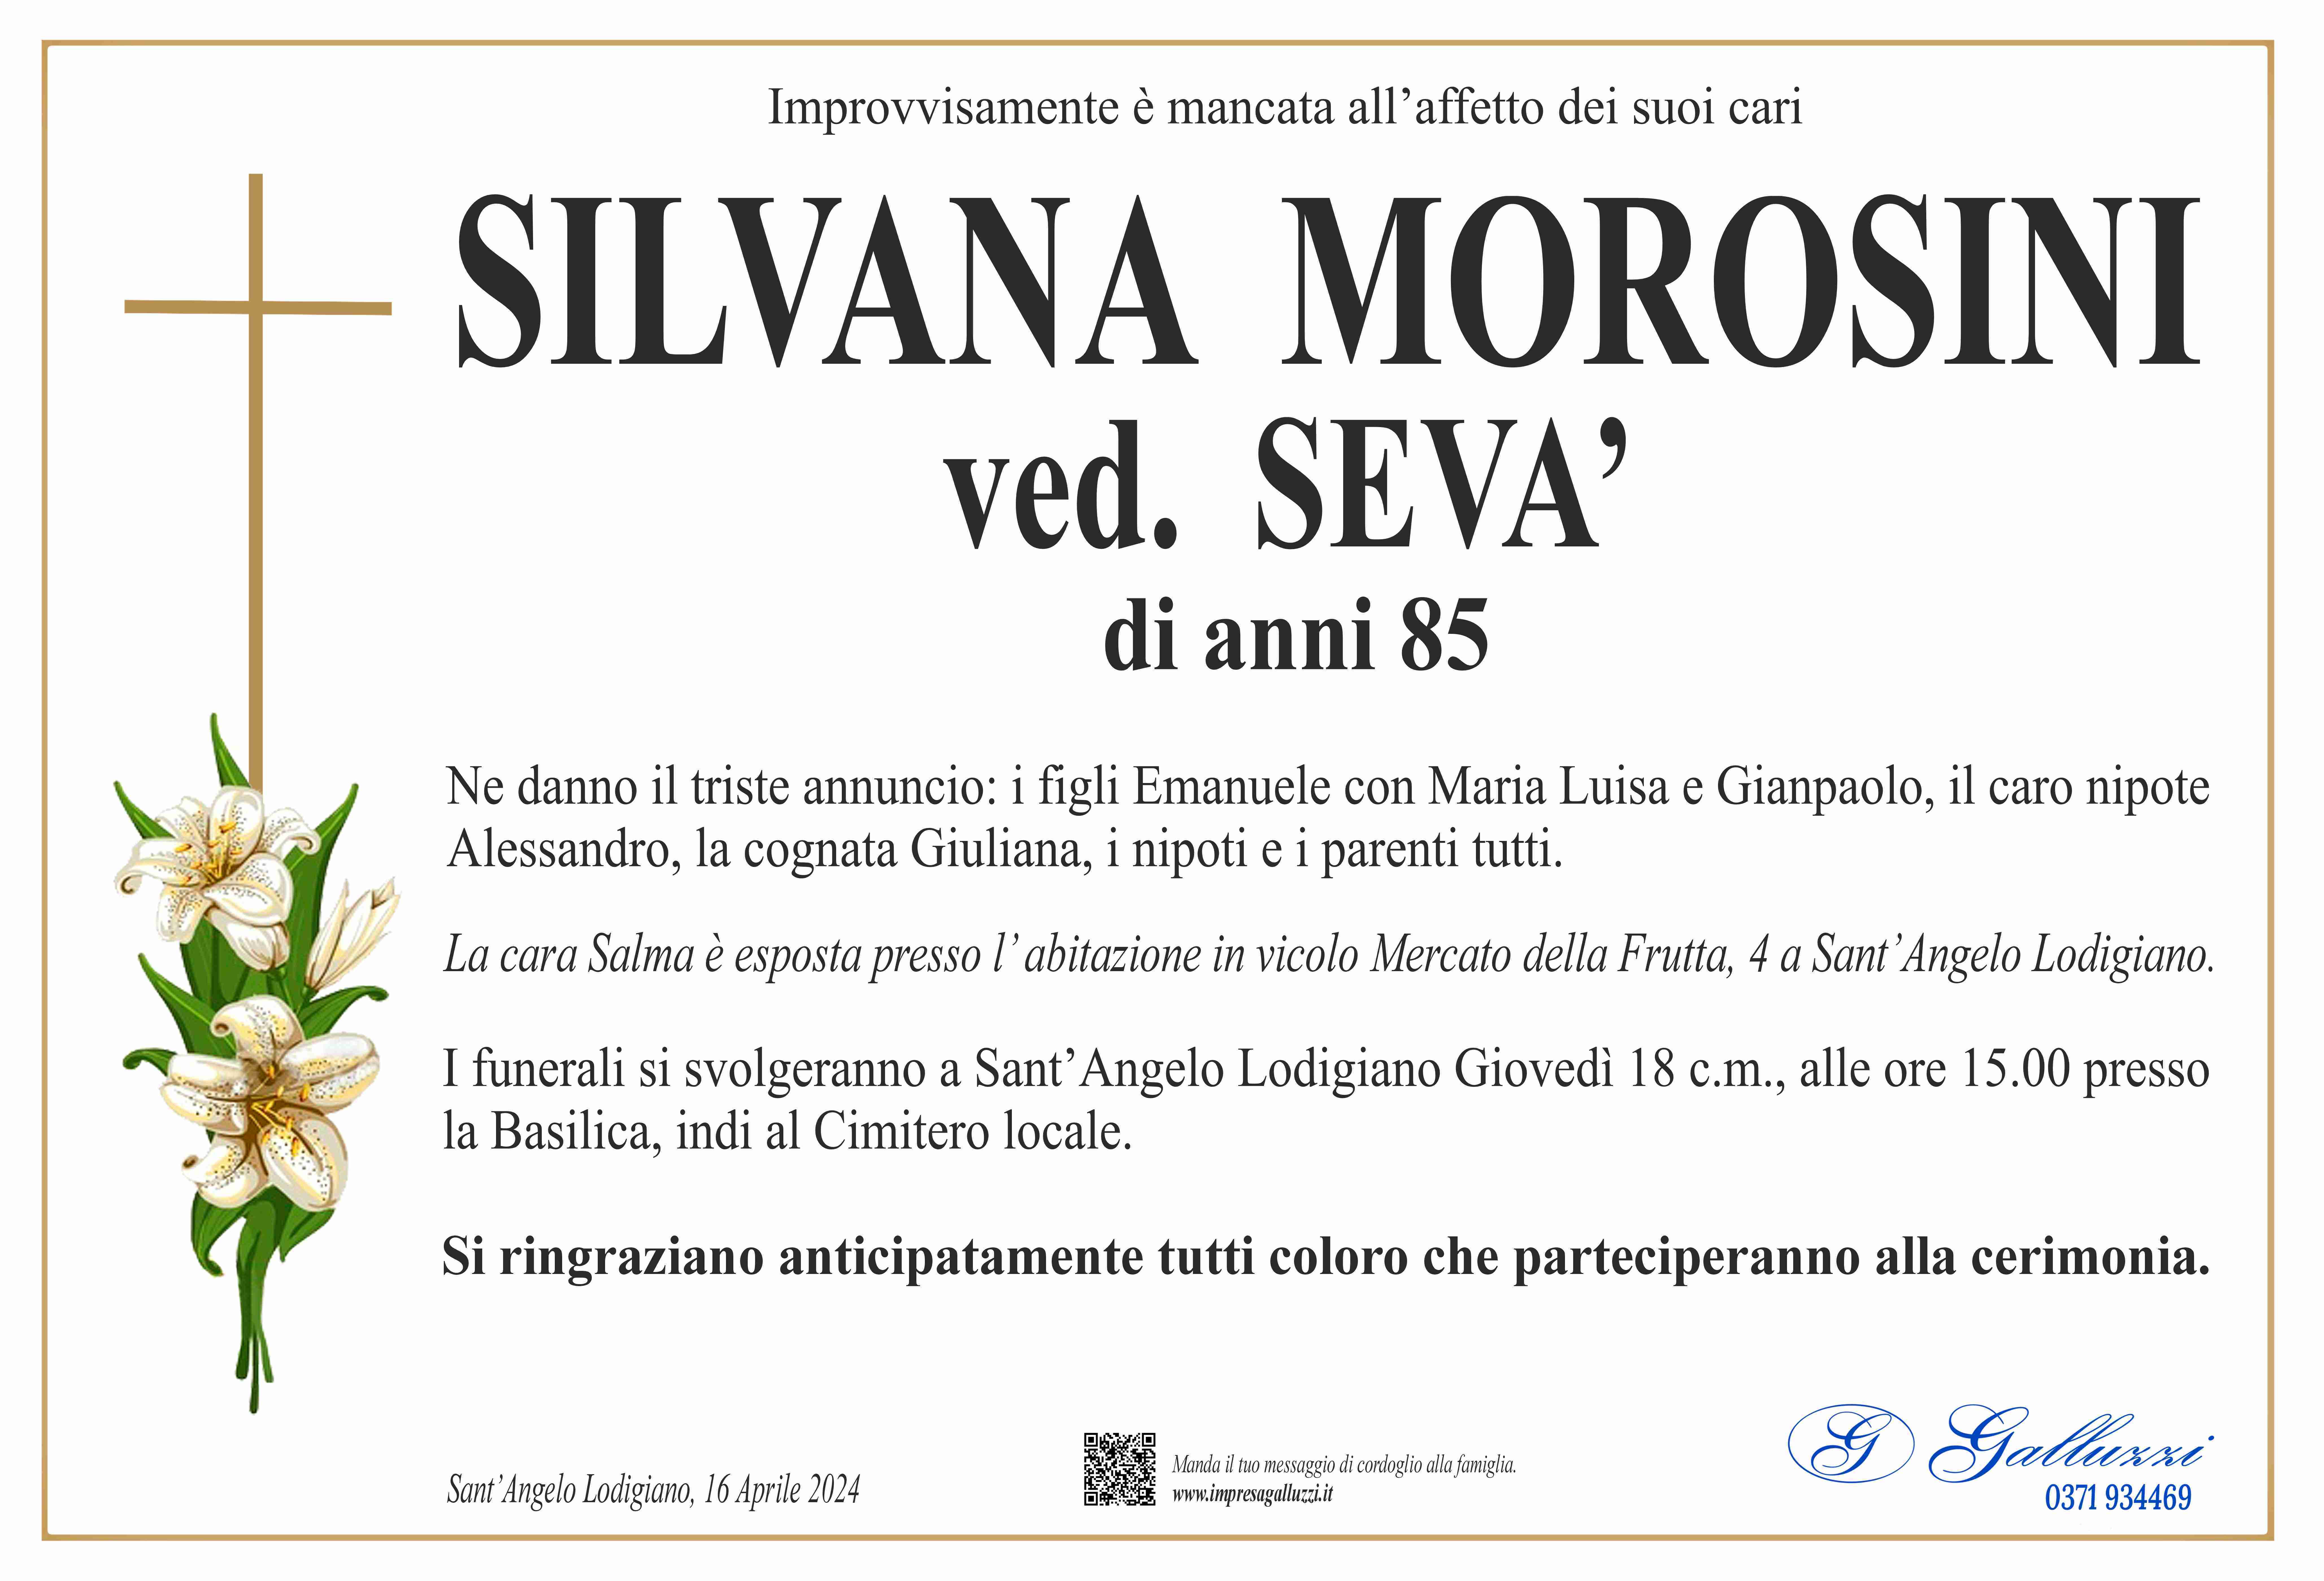 Silvana Morosini